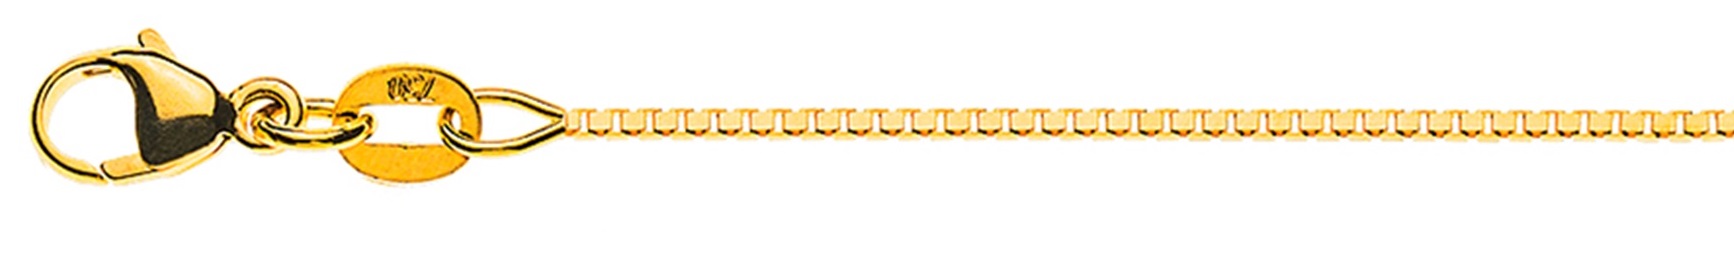 AURONOS Style Necklace yellow gold 9K Venetian chain diamond cut 45cm 0.9mm